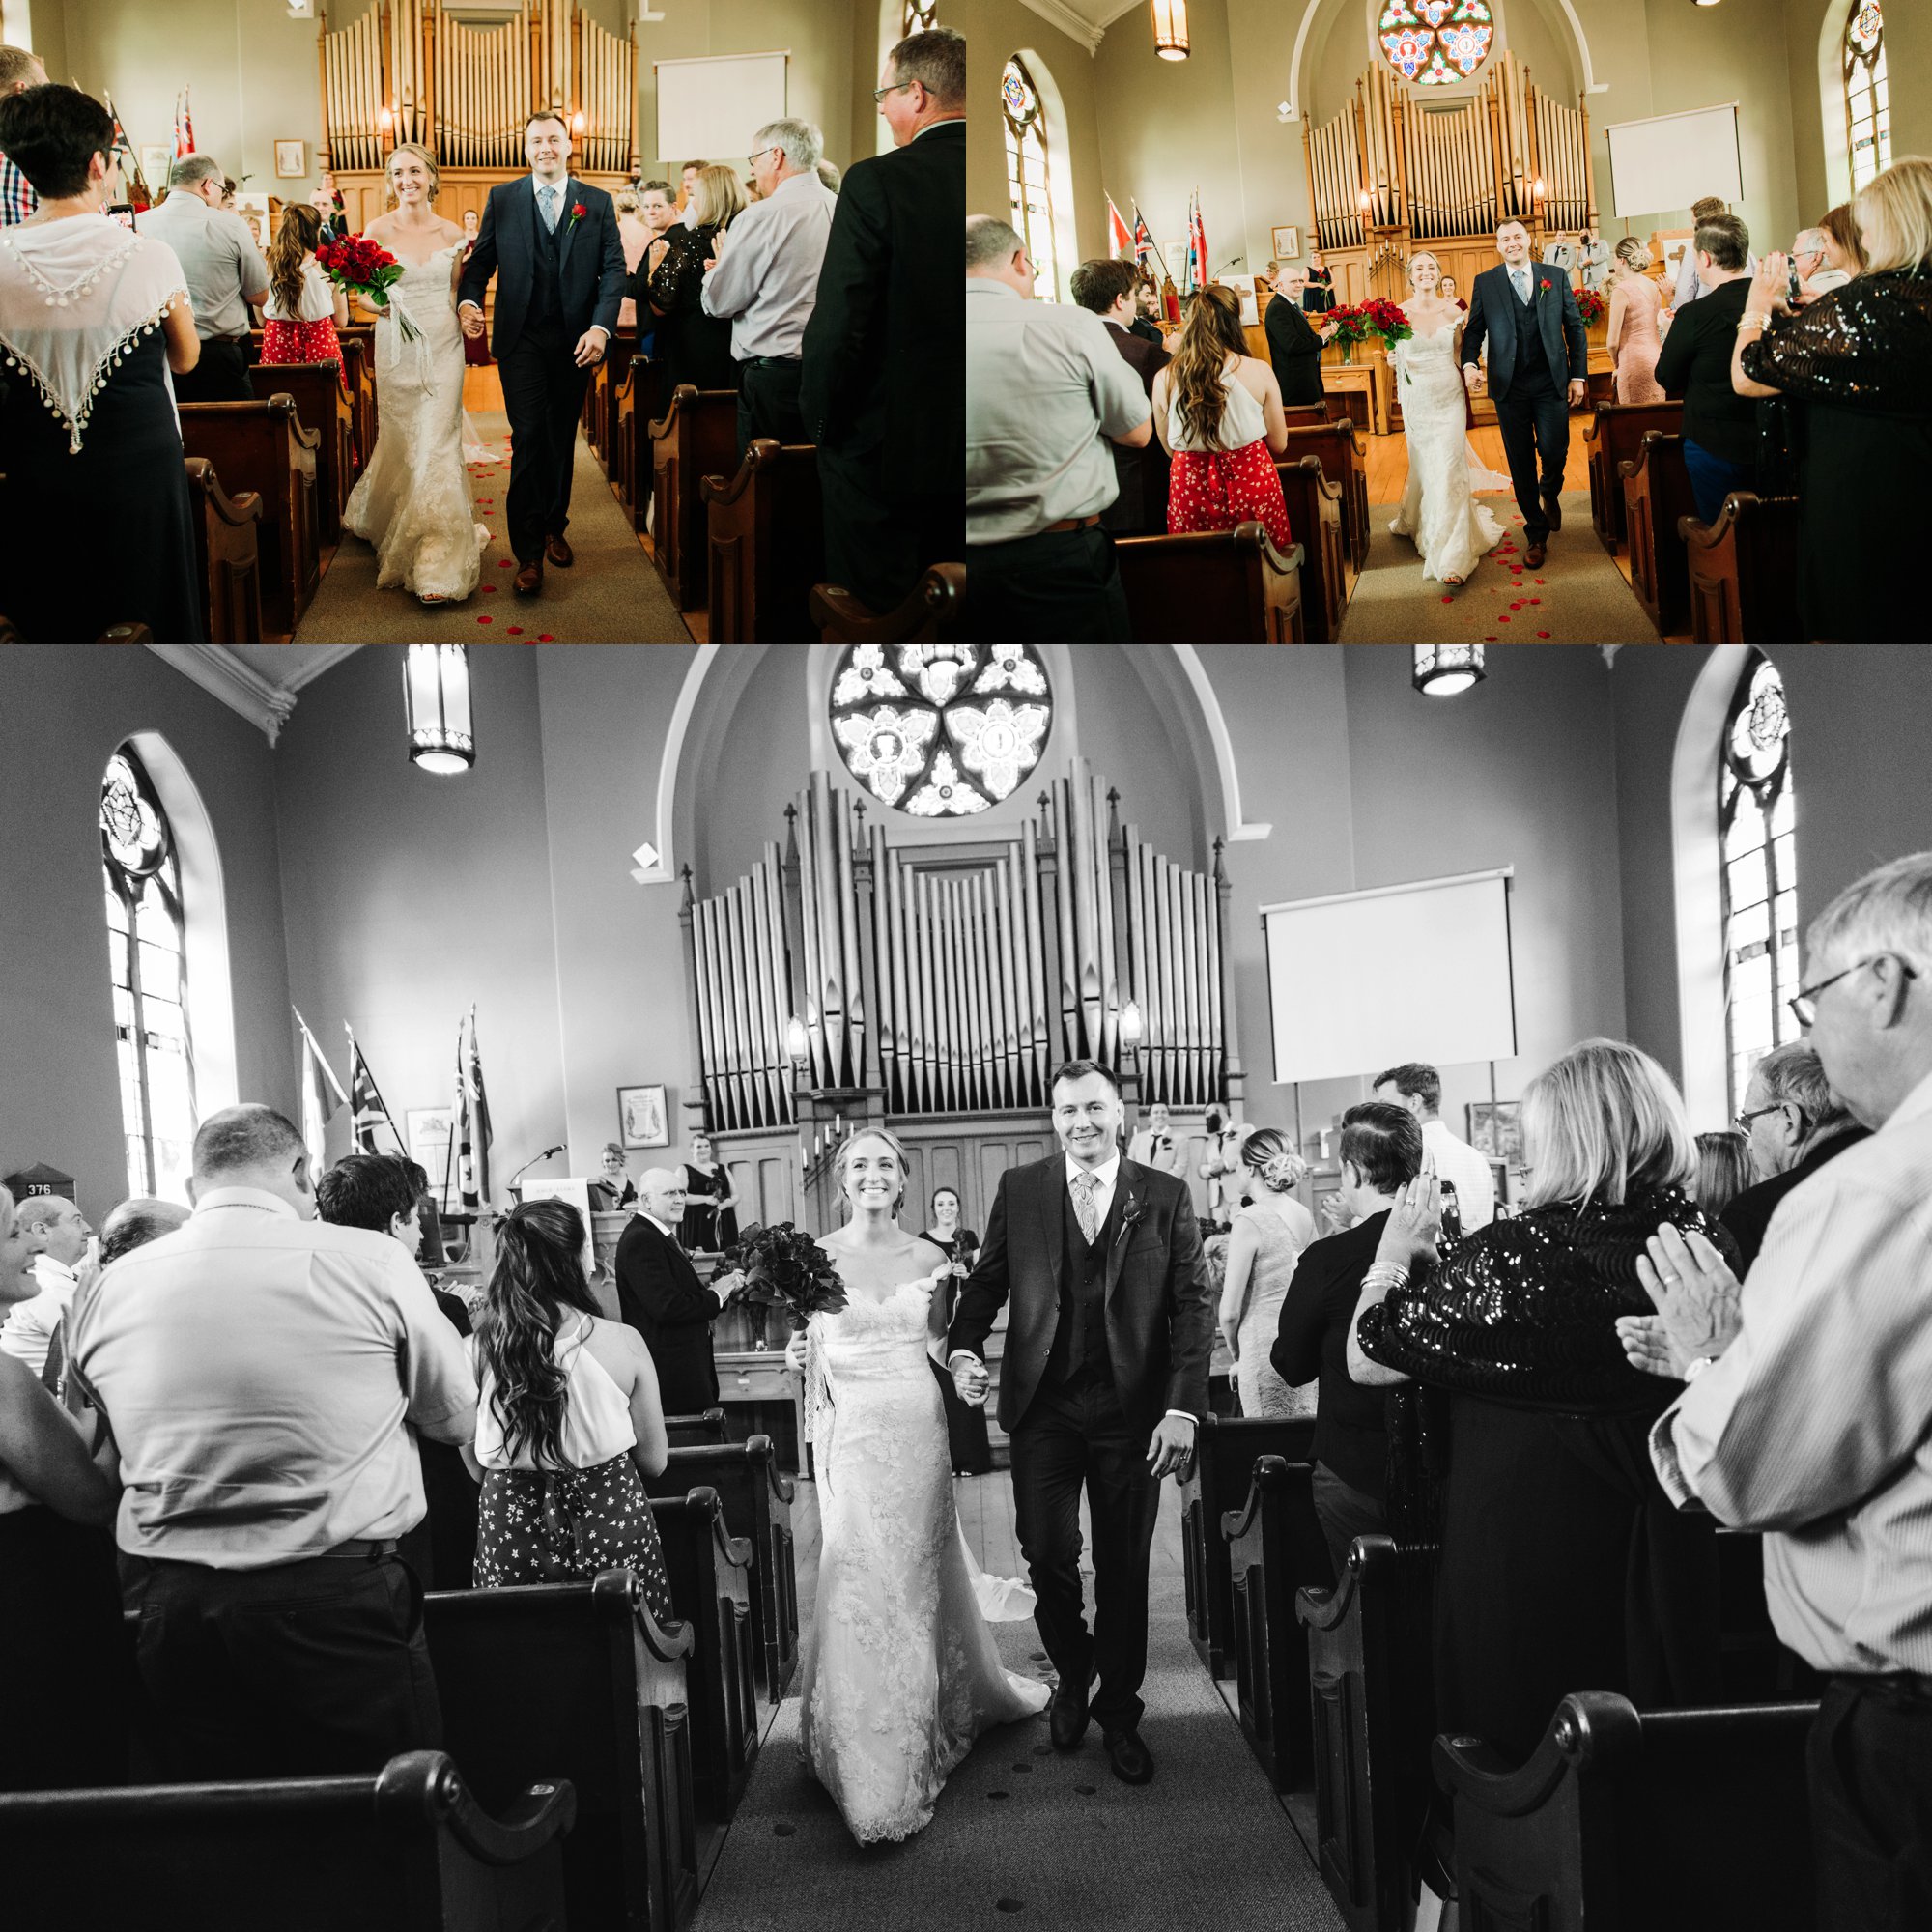 Elora Wedding Photographer | Brittany VanRuymbeke Photos + Films | Ontario Wedding Photographer | Elora Gorge Wedding